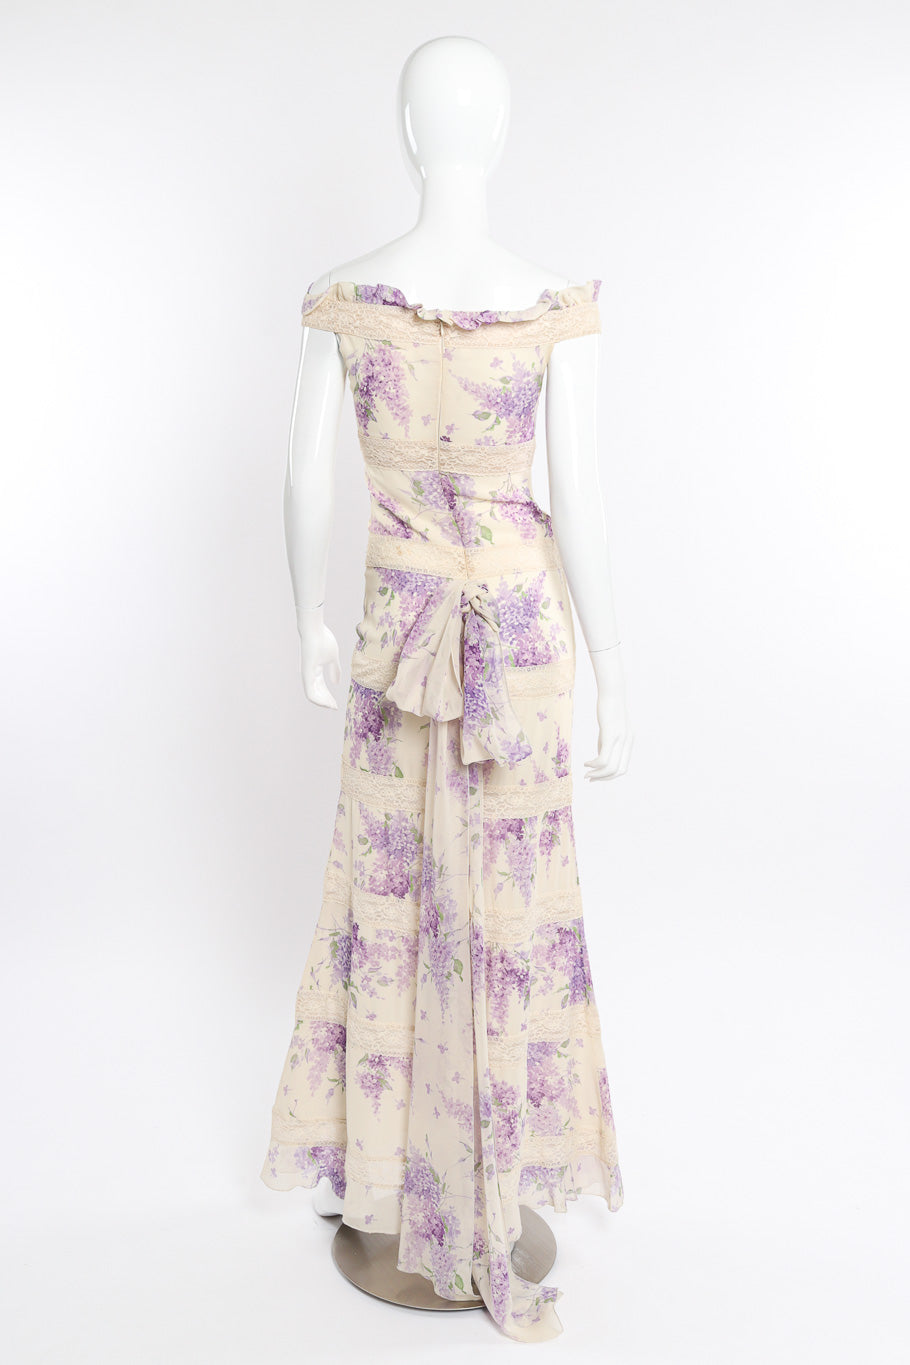 Vintage Valentino Floral Lace Maxi Dress back view on mannequin @Recessla